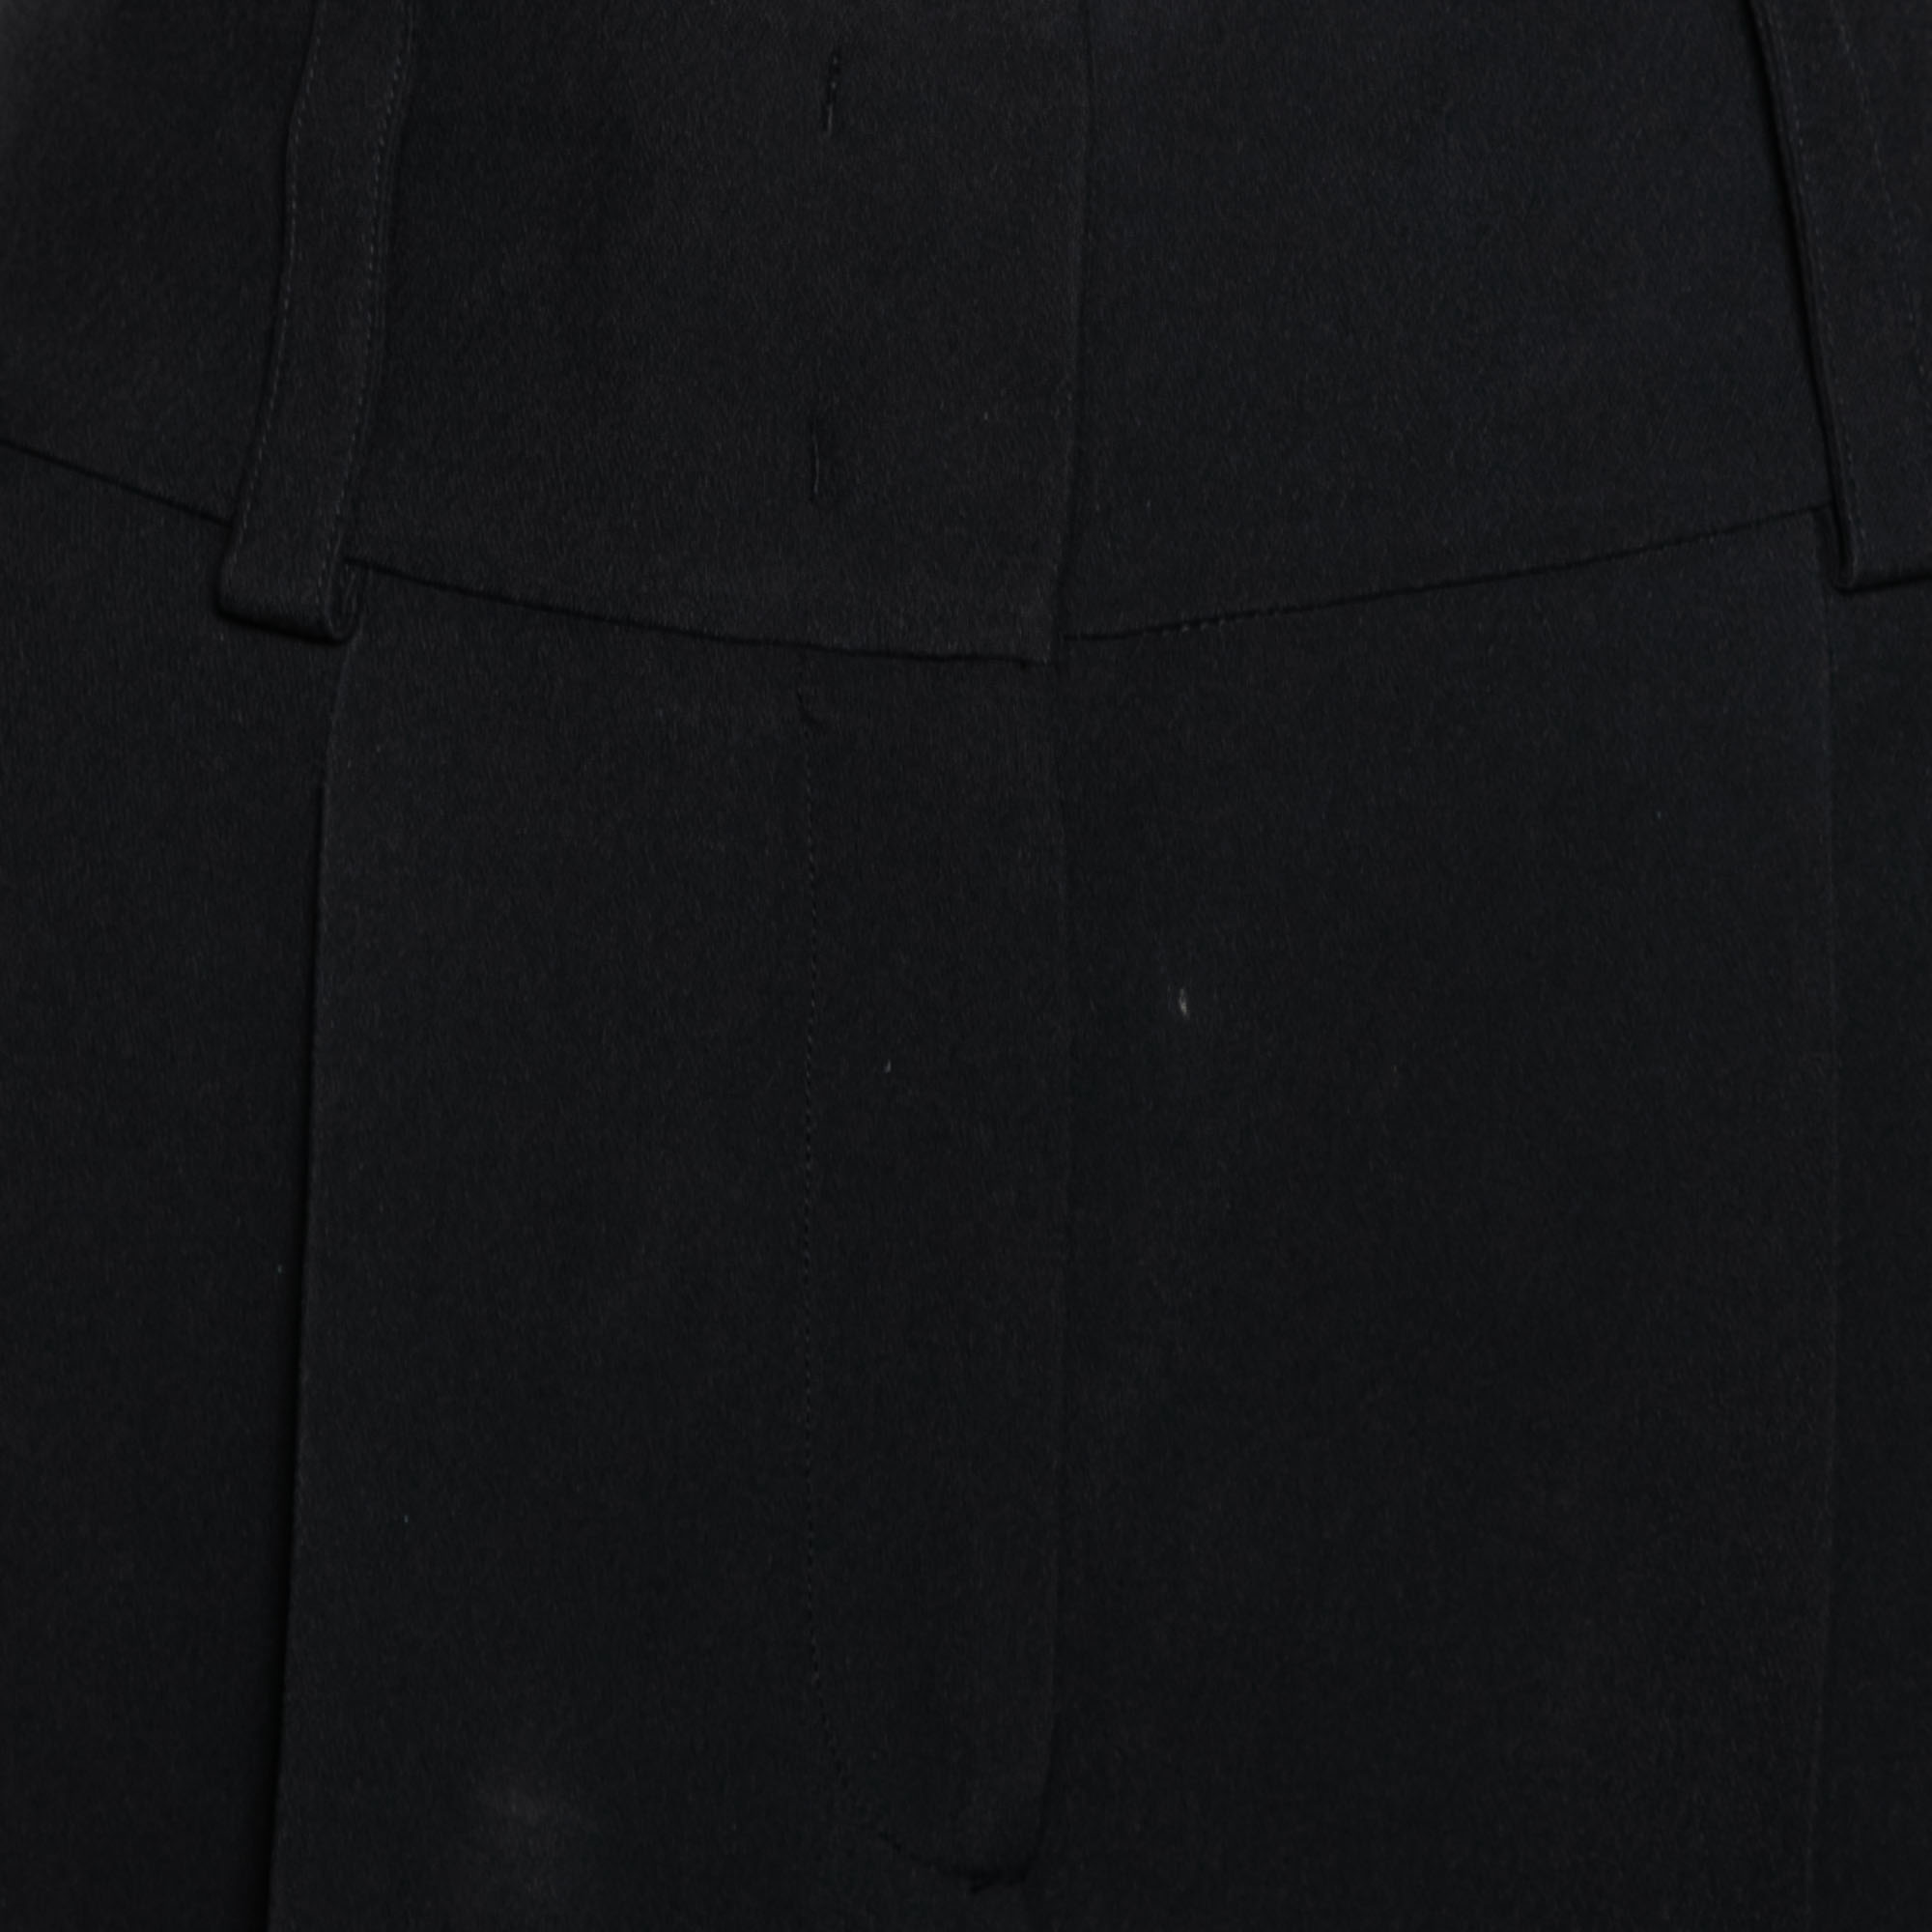 Givenchy Black Crepe & Printed Satin Inset Detailed Pants M